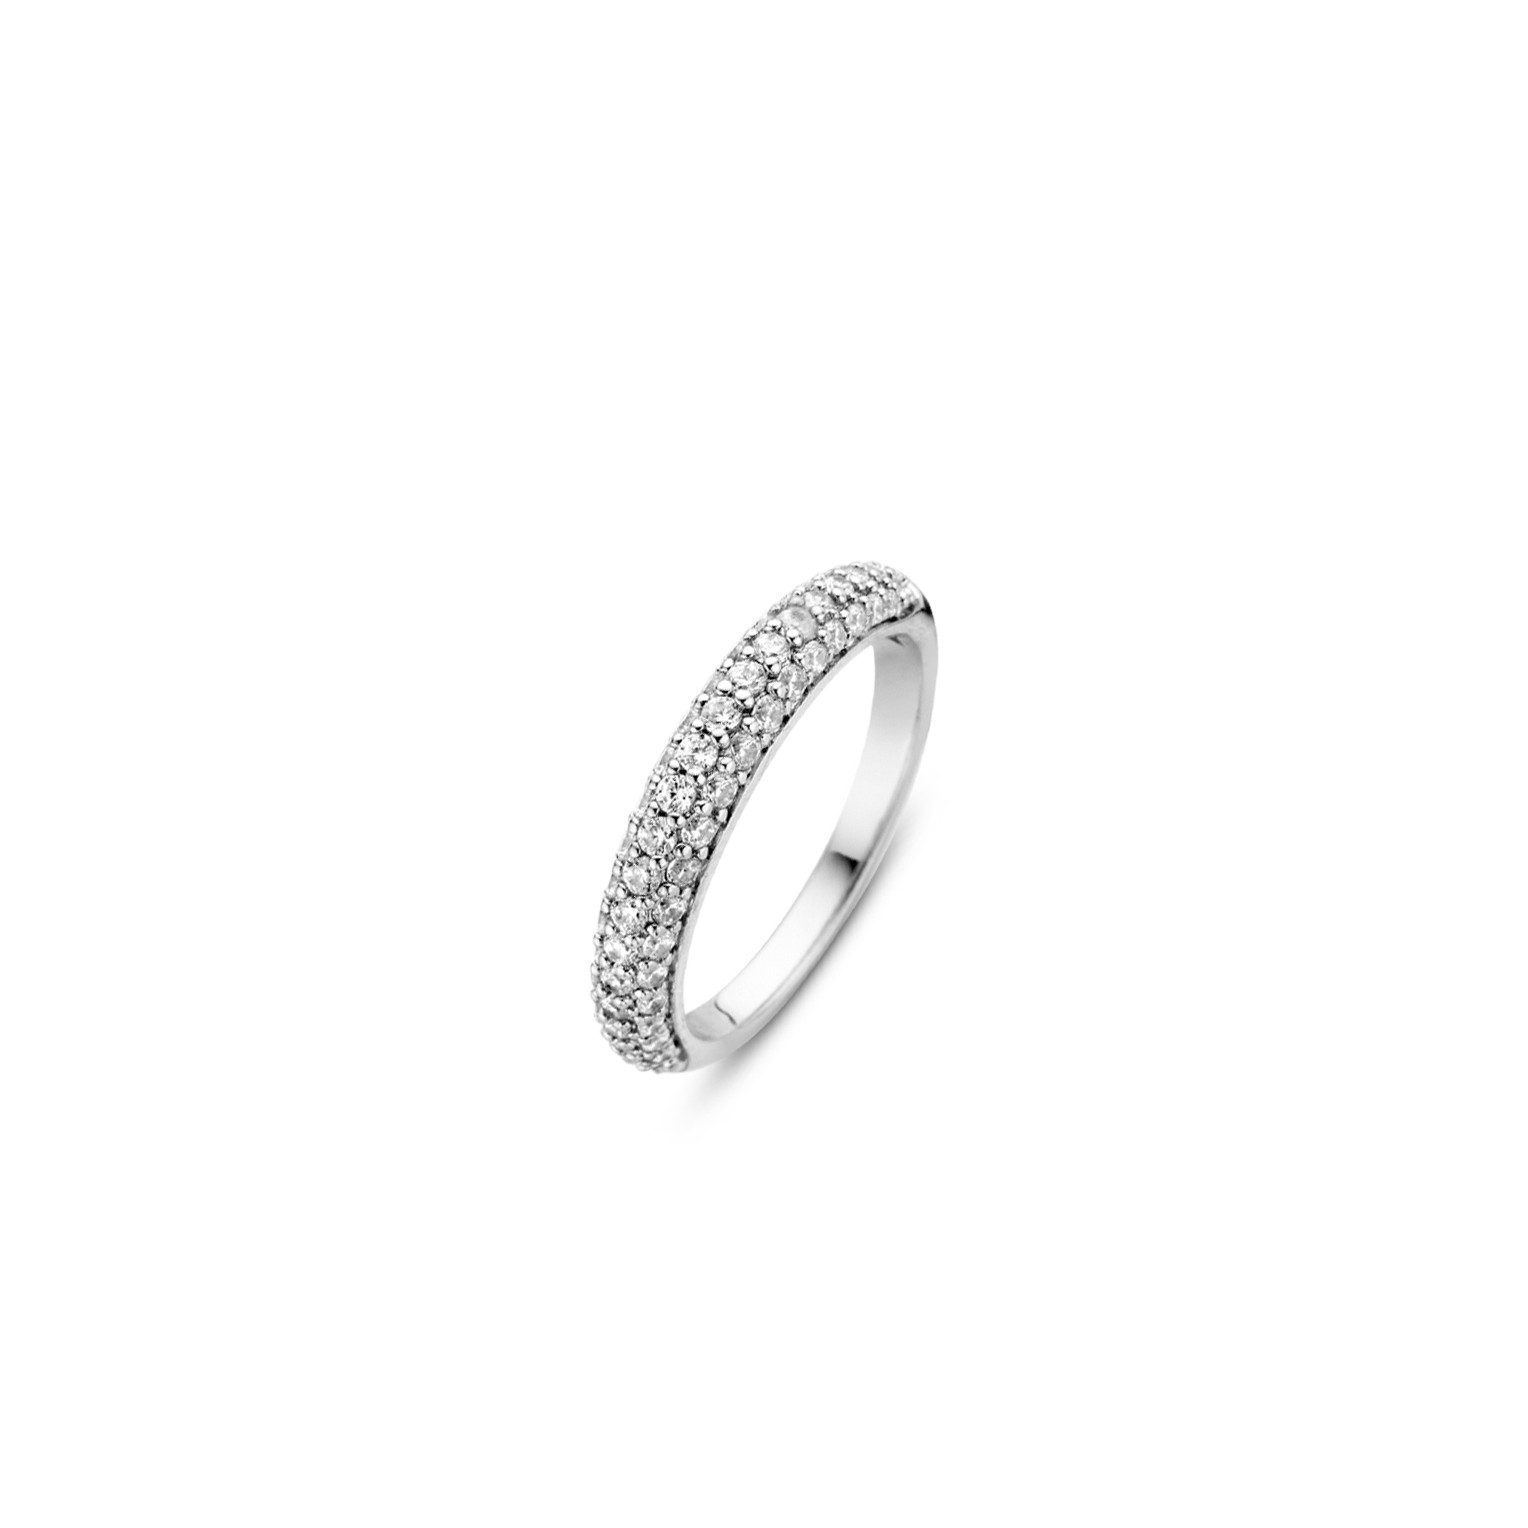 TI SENTO - Milano Ring 12105ZI Gala Jewelers Inc. White Oak, PA